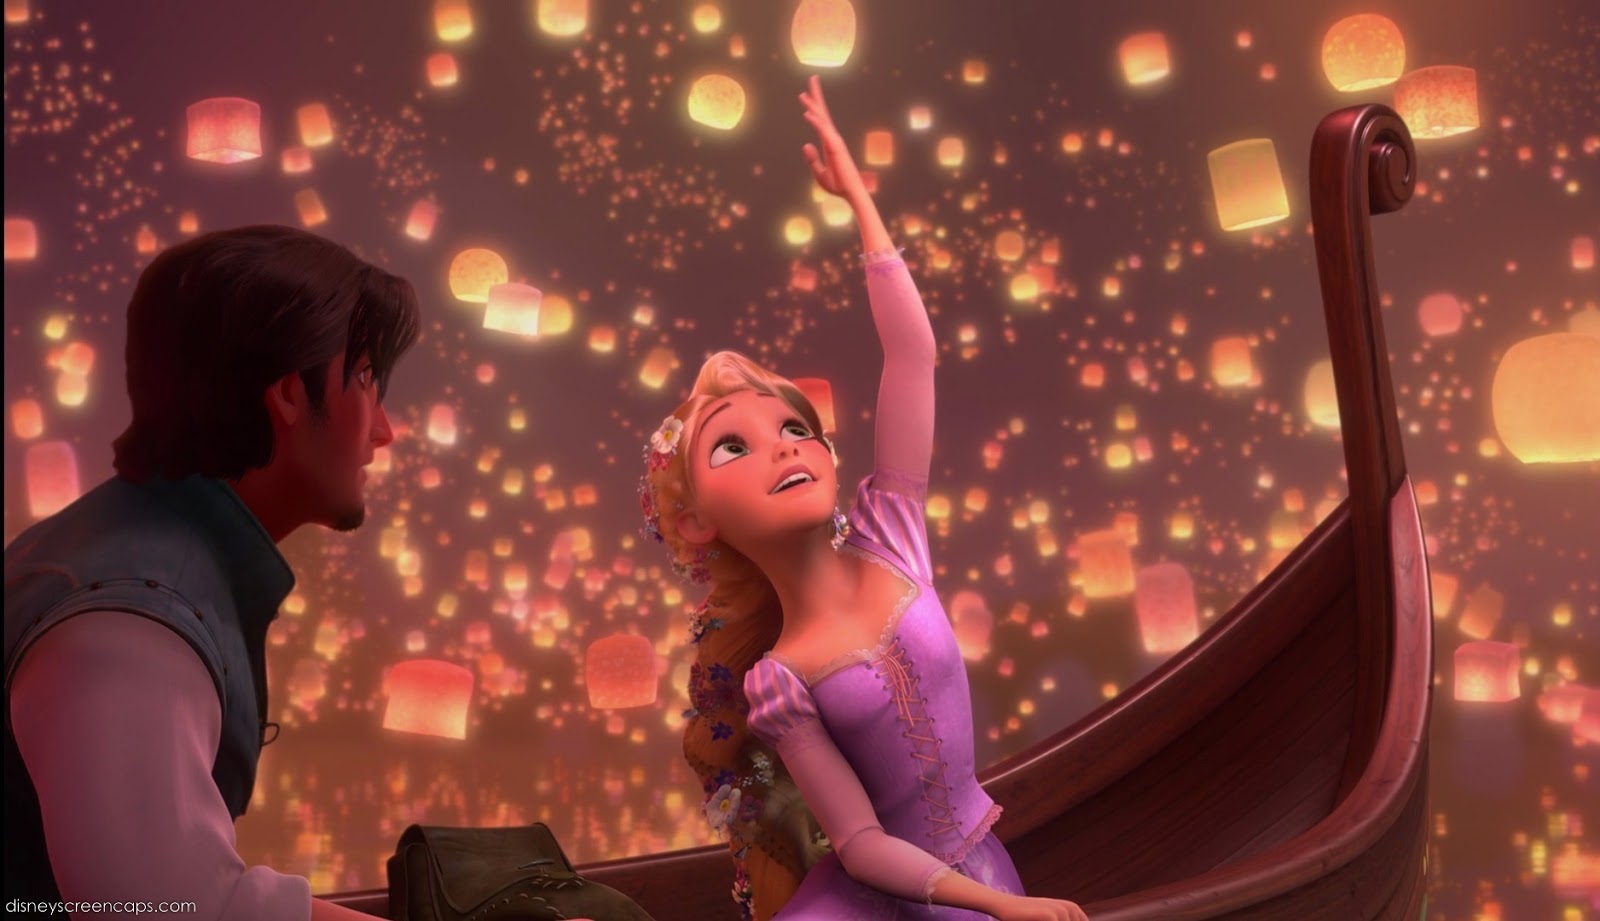 Disney Tangled Rapunzel and Eugene Wallpapers  Kids Online World Blog